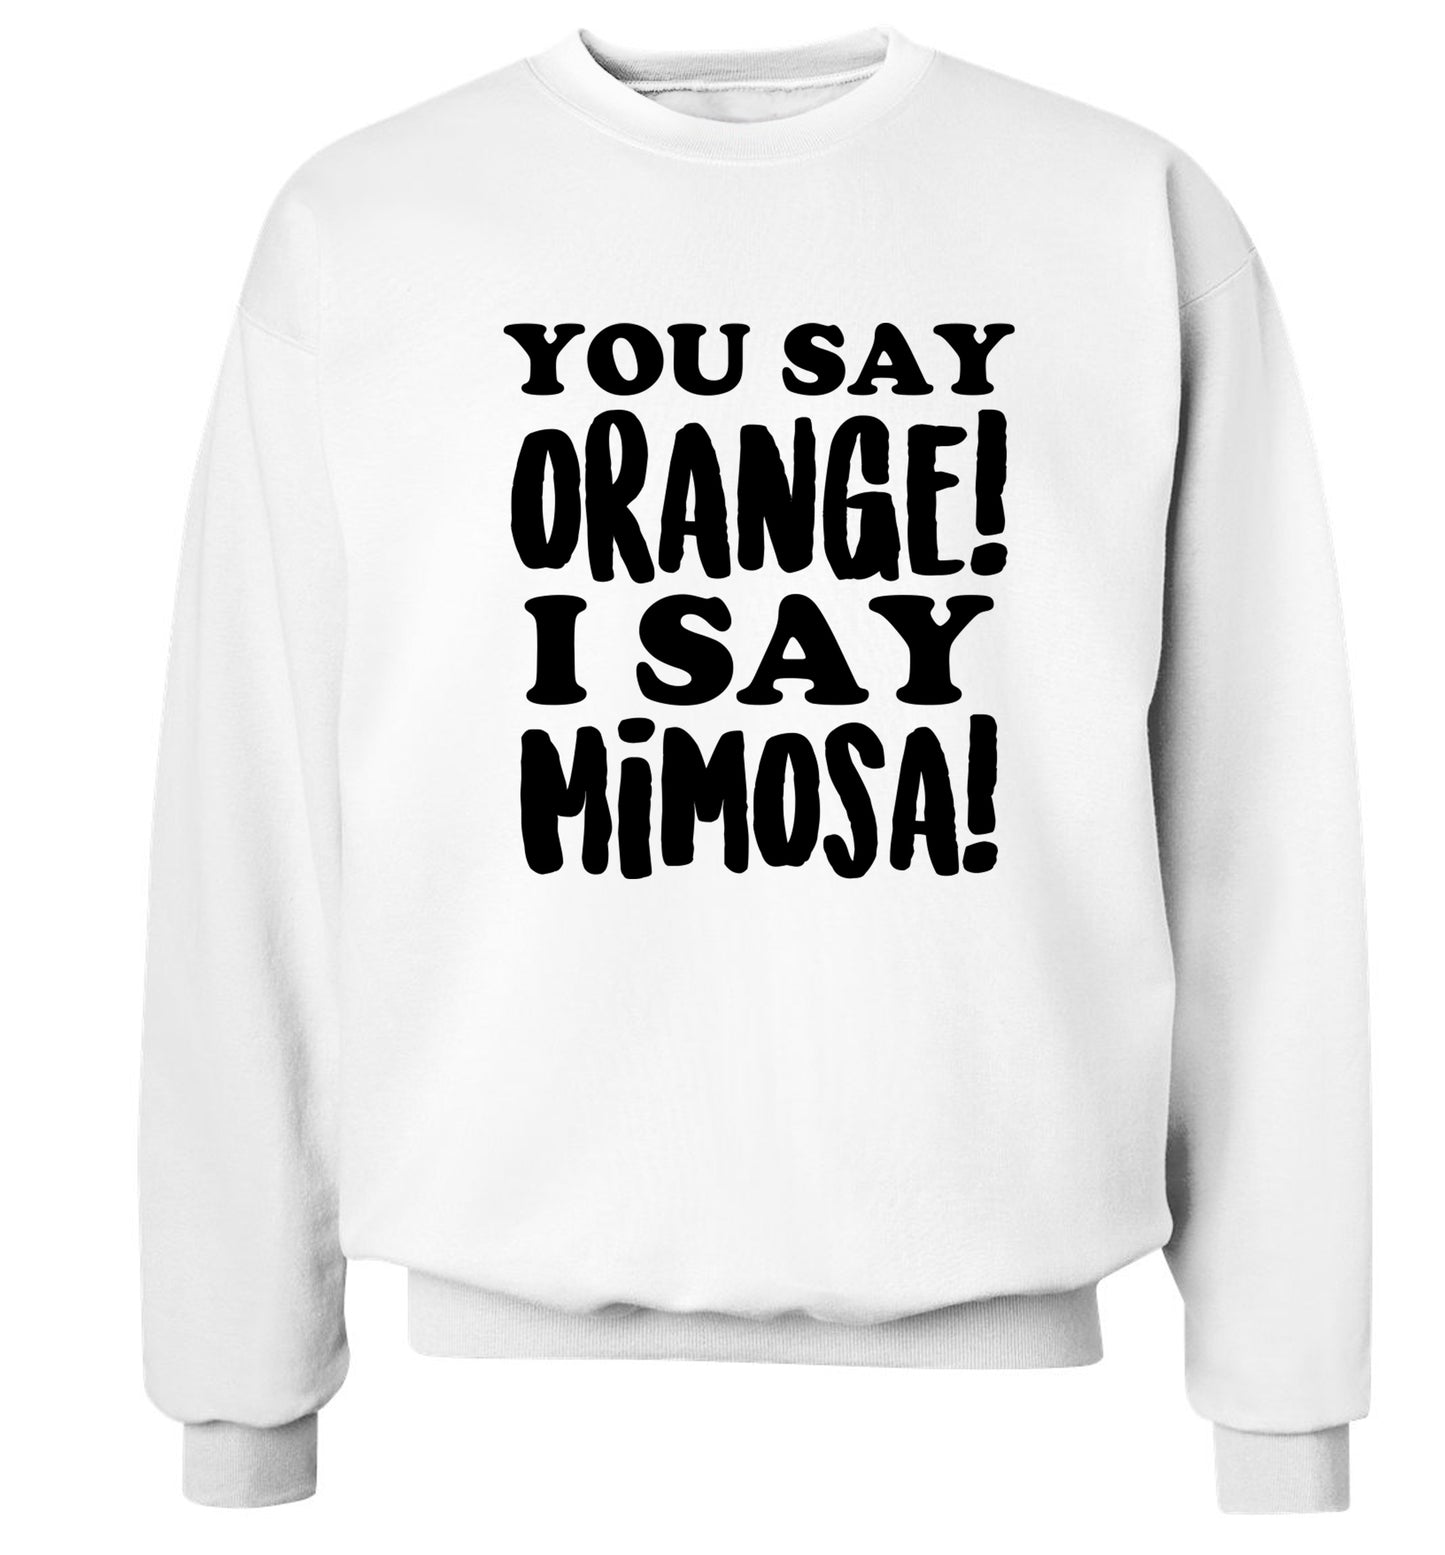 You say orange I say mimosa! Adult's unisex white Sweater 2XL